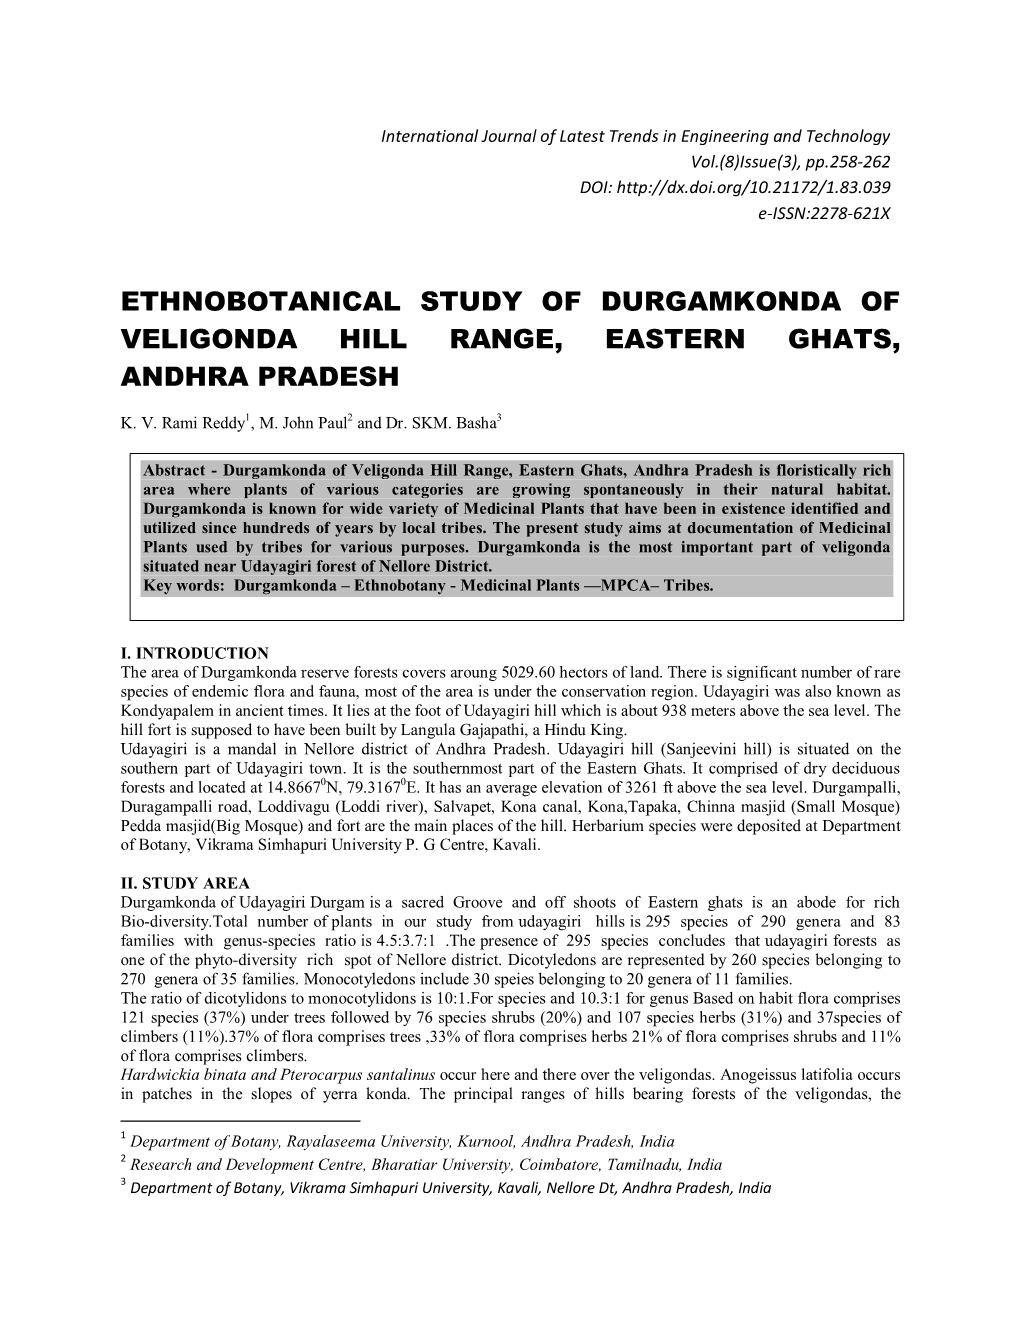 Ethnobotanical Study of Durgamkonda of Veligonda Hill Range, Eastern Ghats, Andhra Pradesh